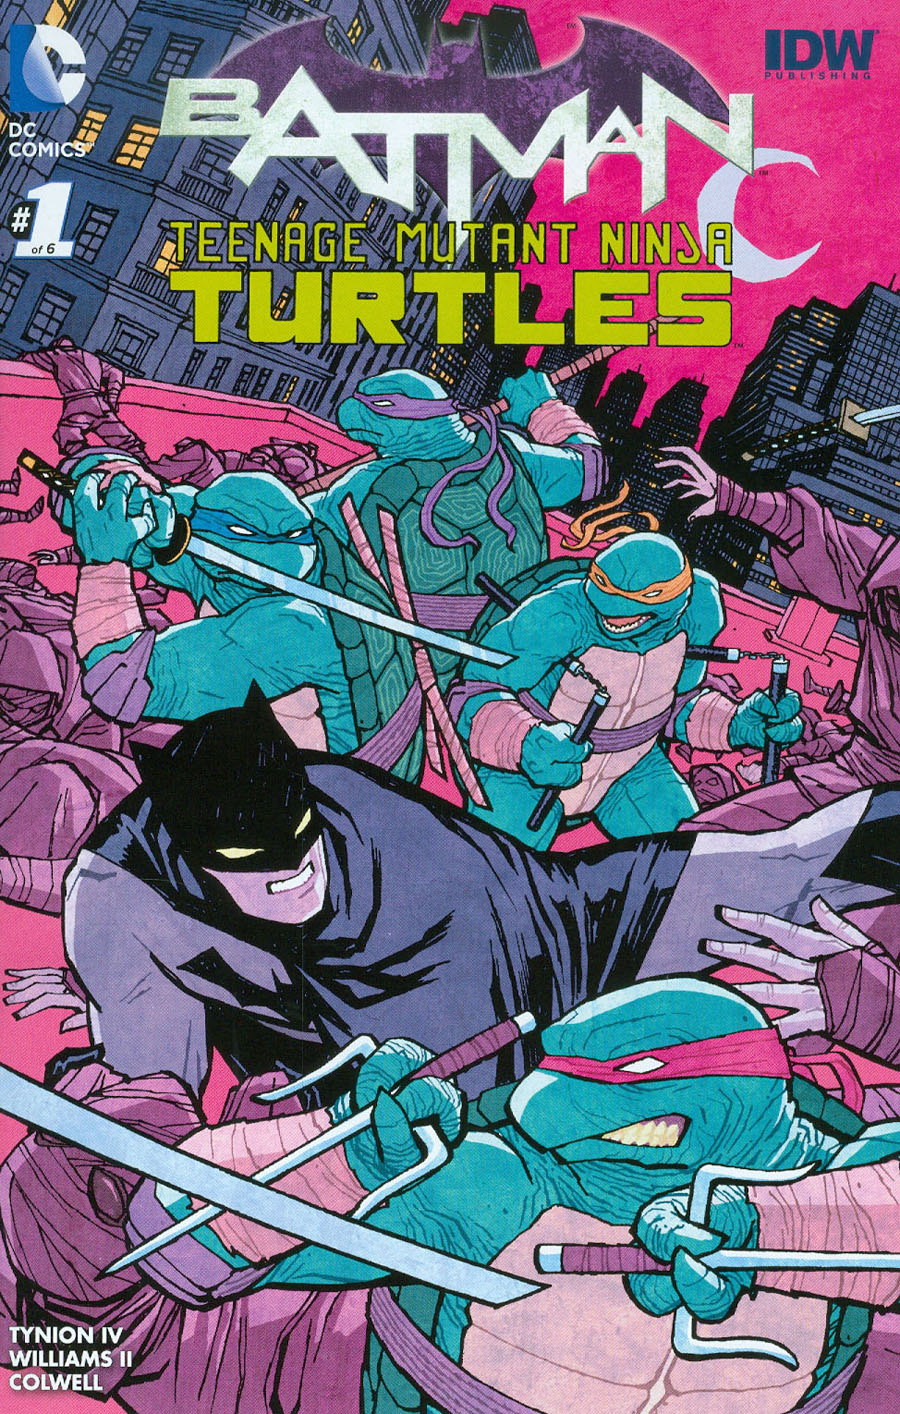 DC Collectibles: Batman vs Teenage Mutant Ninja Turtles GameStop Exclusive  Batman & Leonardo and Robin & Raphael Review